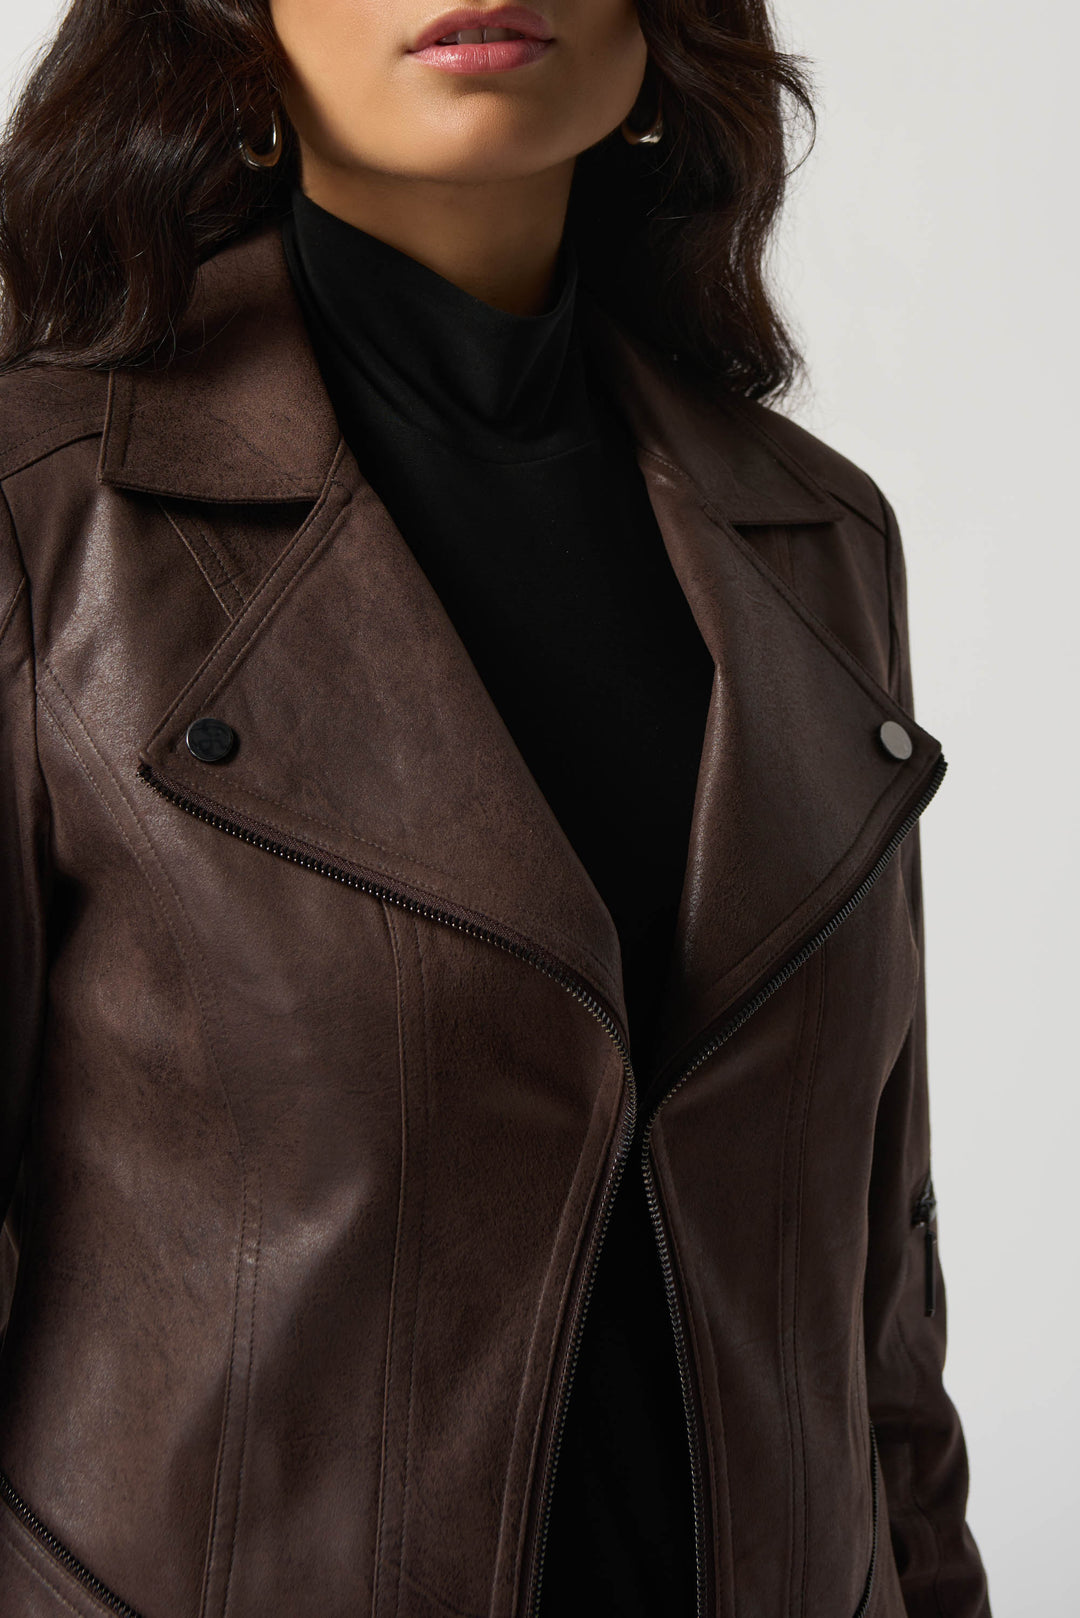 Joseph Ribkoff Fall 2023 women's casual faux suede leather vegan brown moto jacket - detail